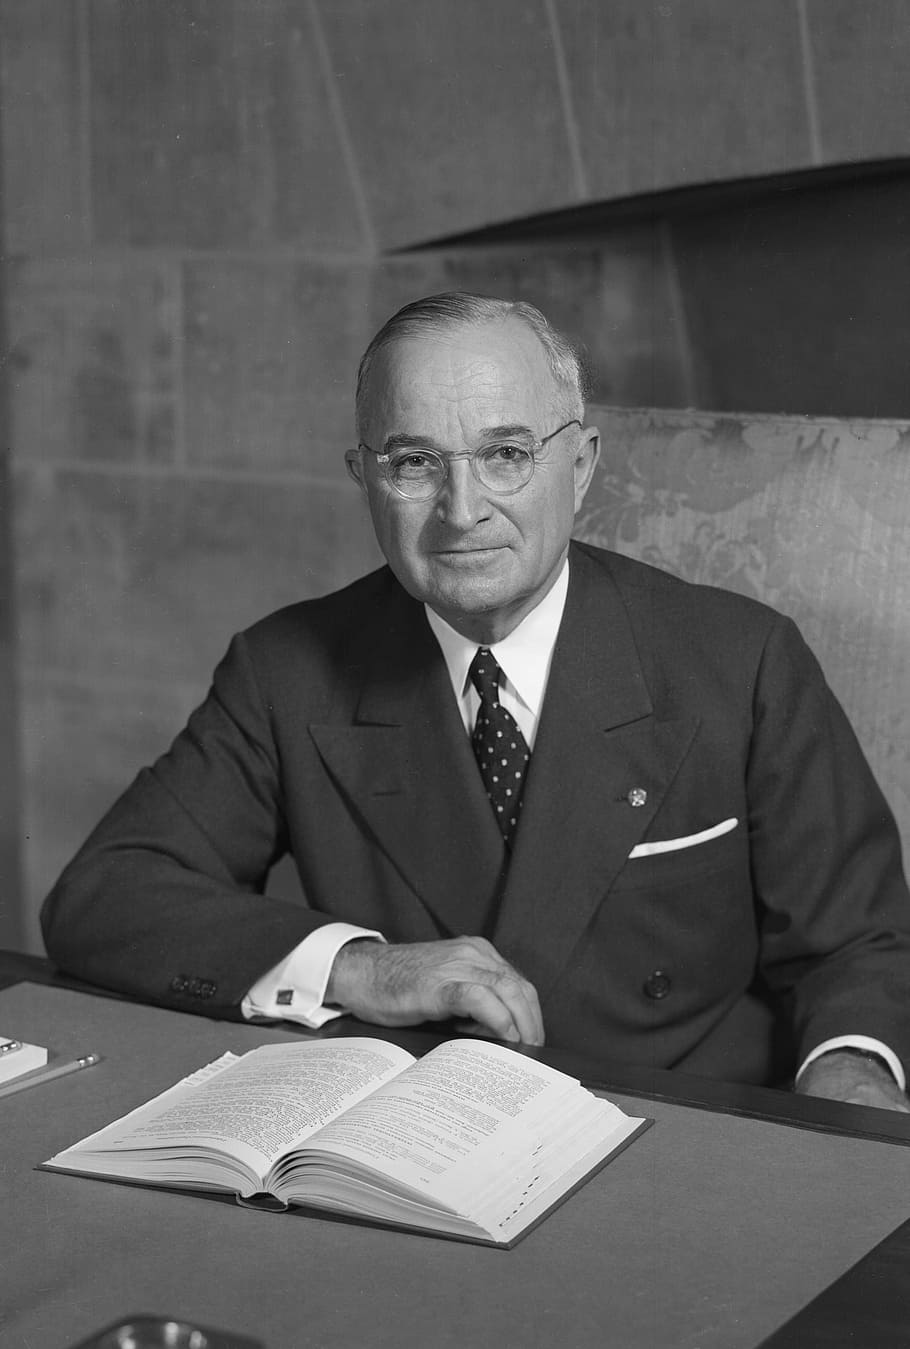 harry s., retrato de truman, Harry S. Truman, retrato, foto, harry s truman, presidente, domínio público, preto e branco, pessoas